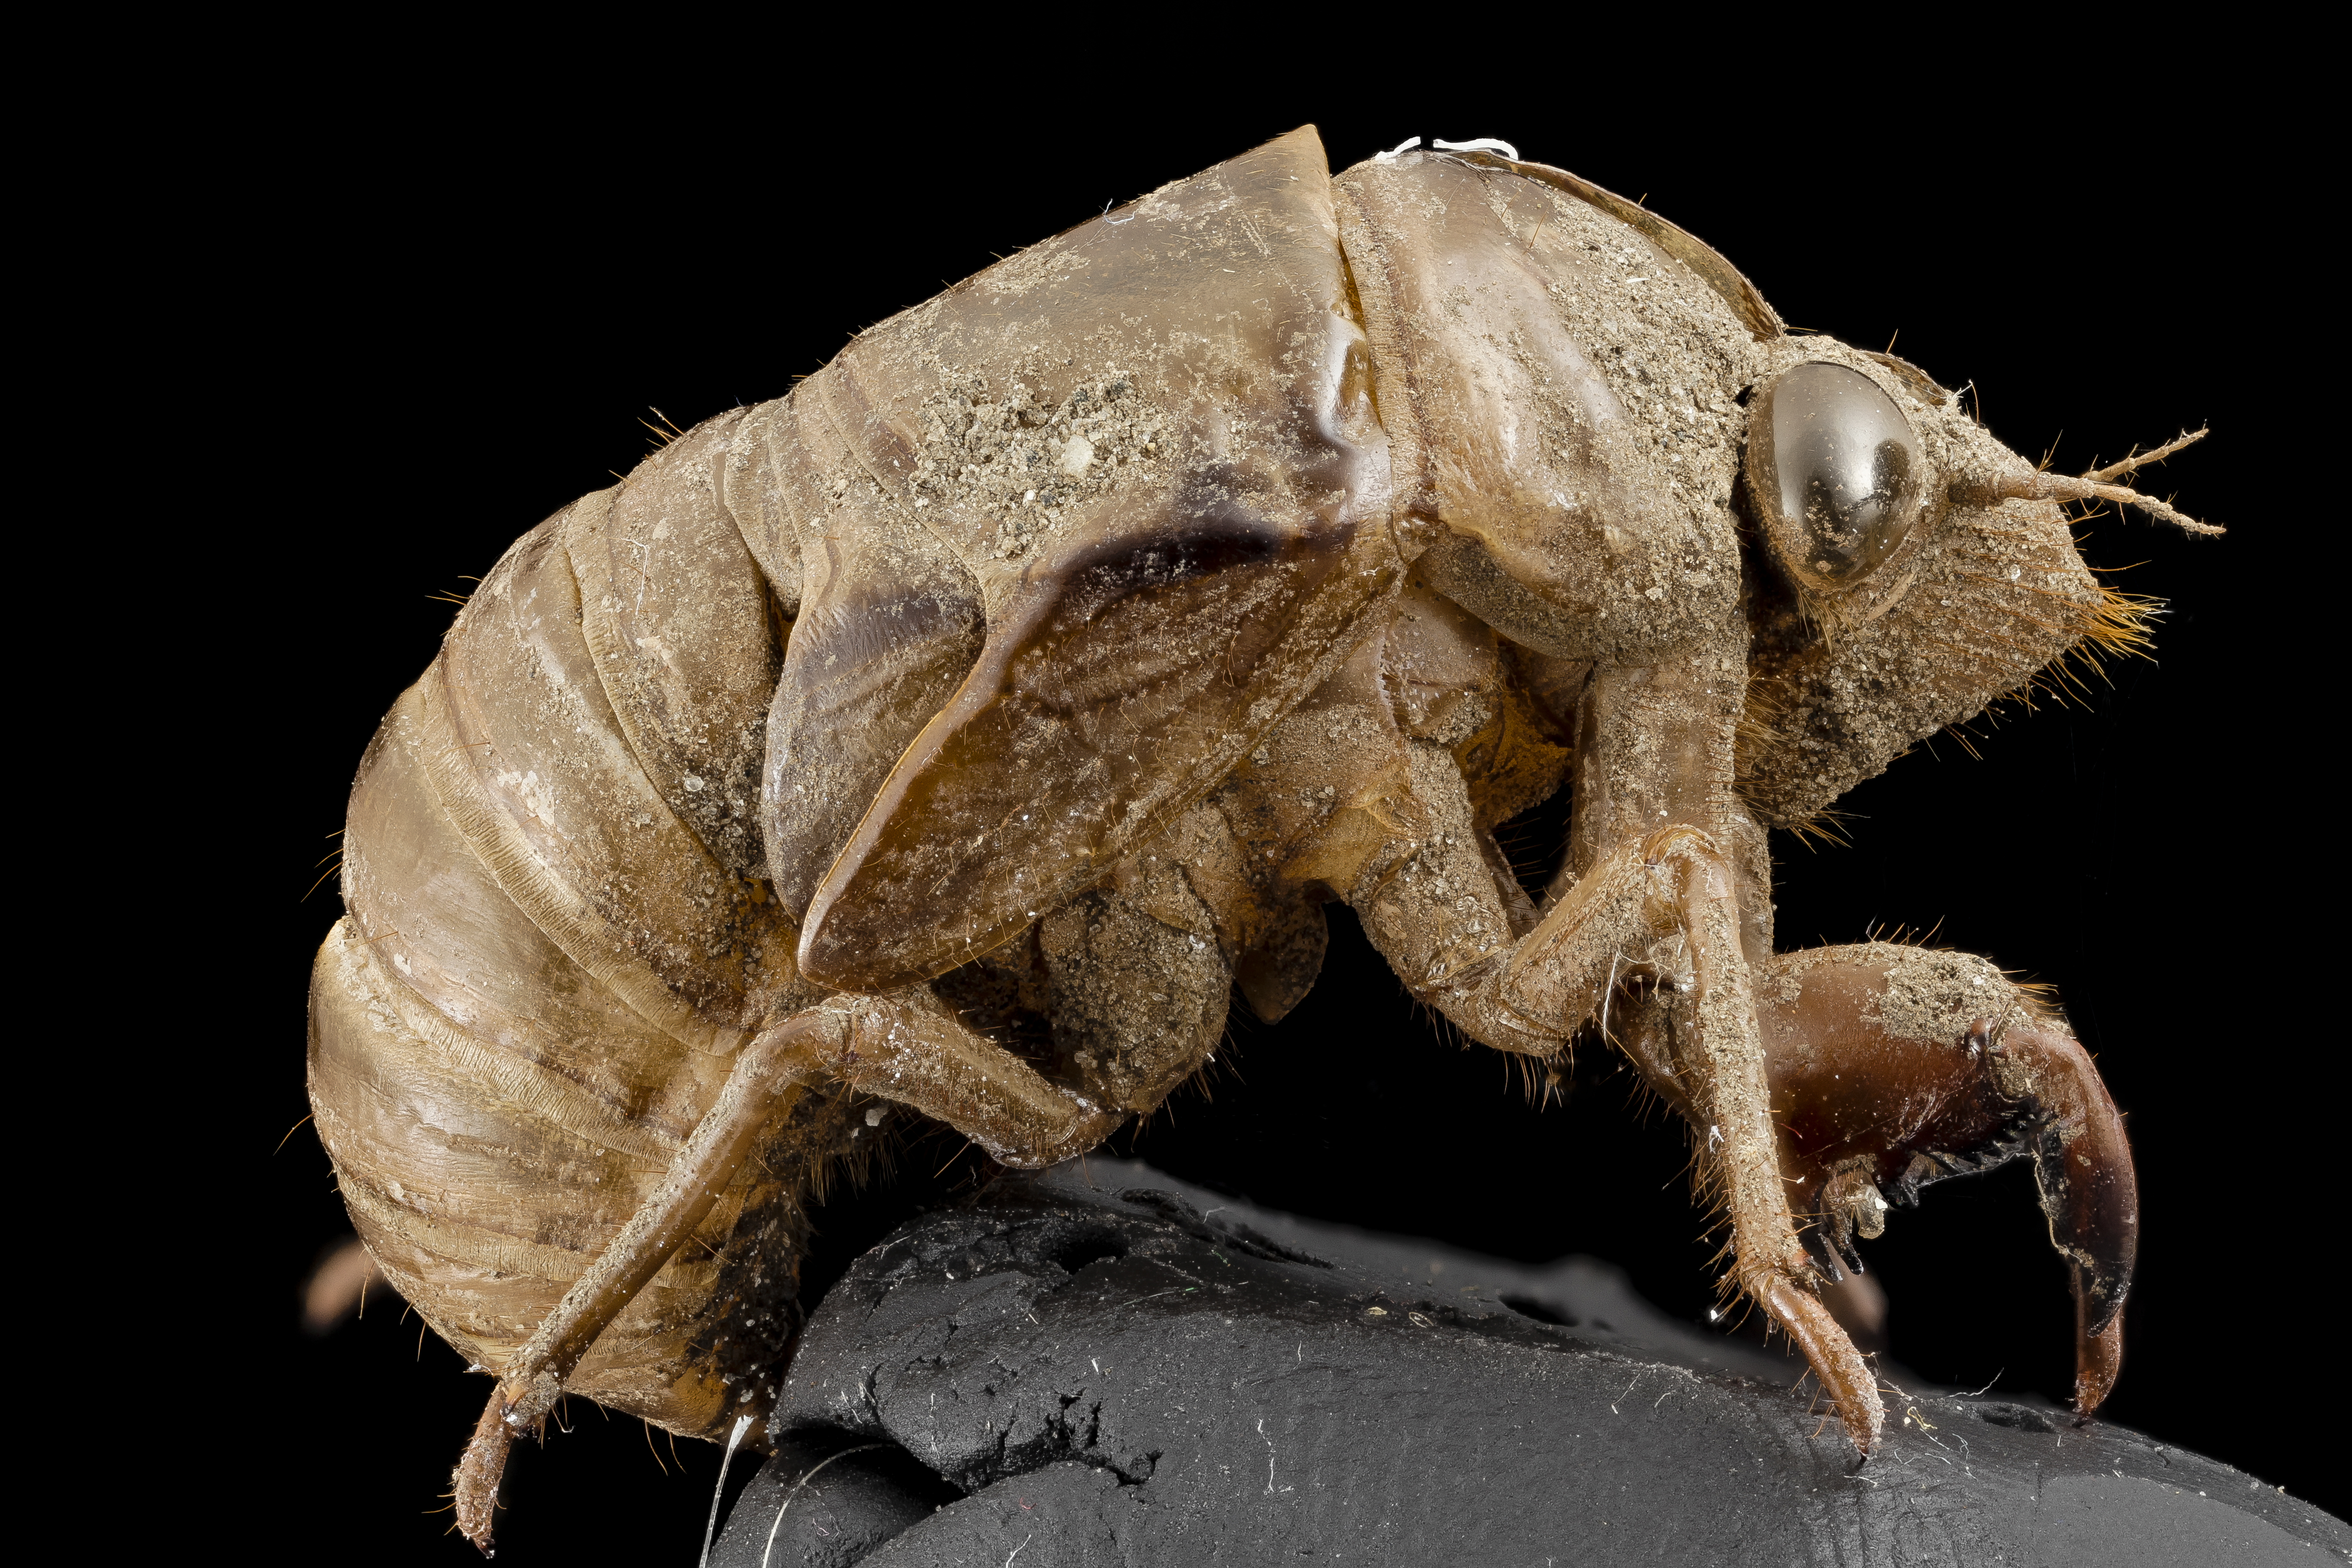 Are cicadas harmful?